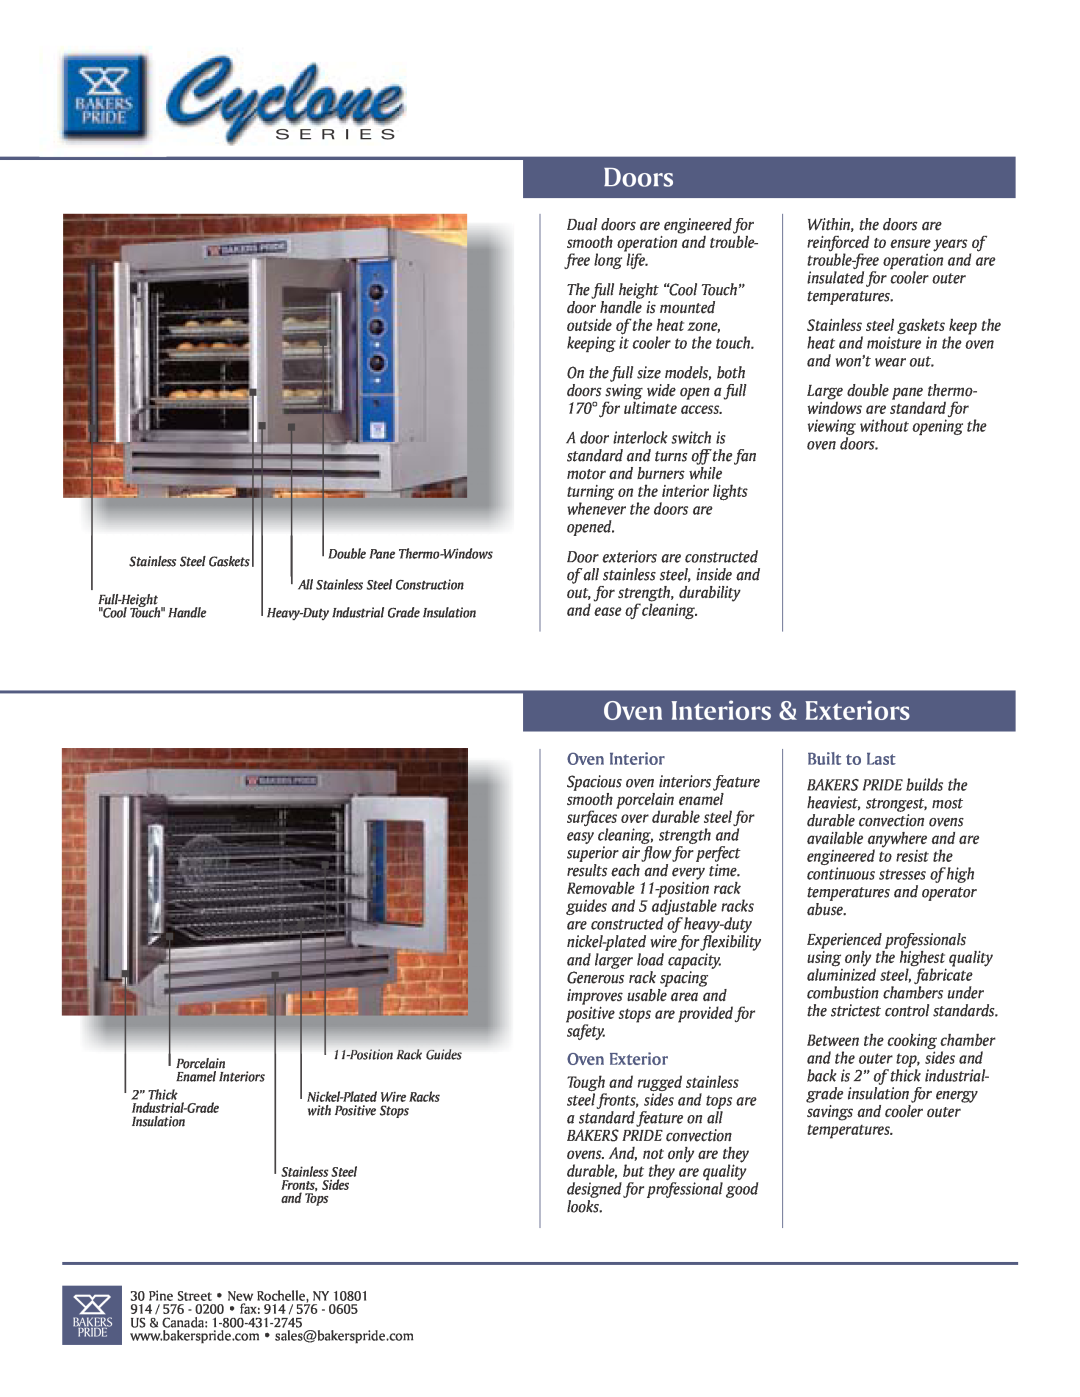 Bakers Pride Oven CO11 manual Doors, Oven Interiors & Exteriors, Oven Exterior, Built to Last 